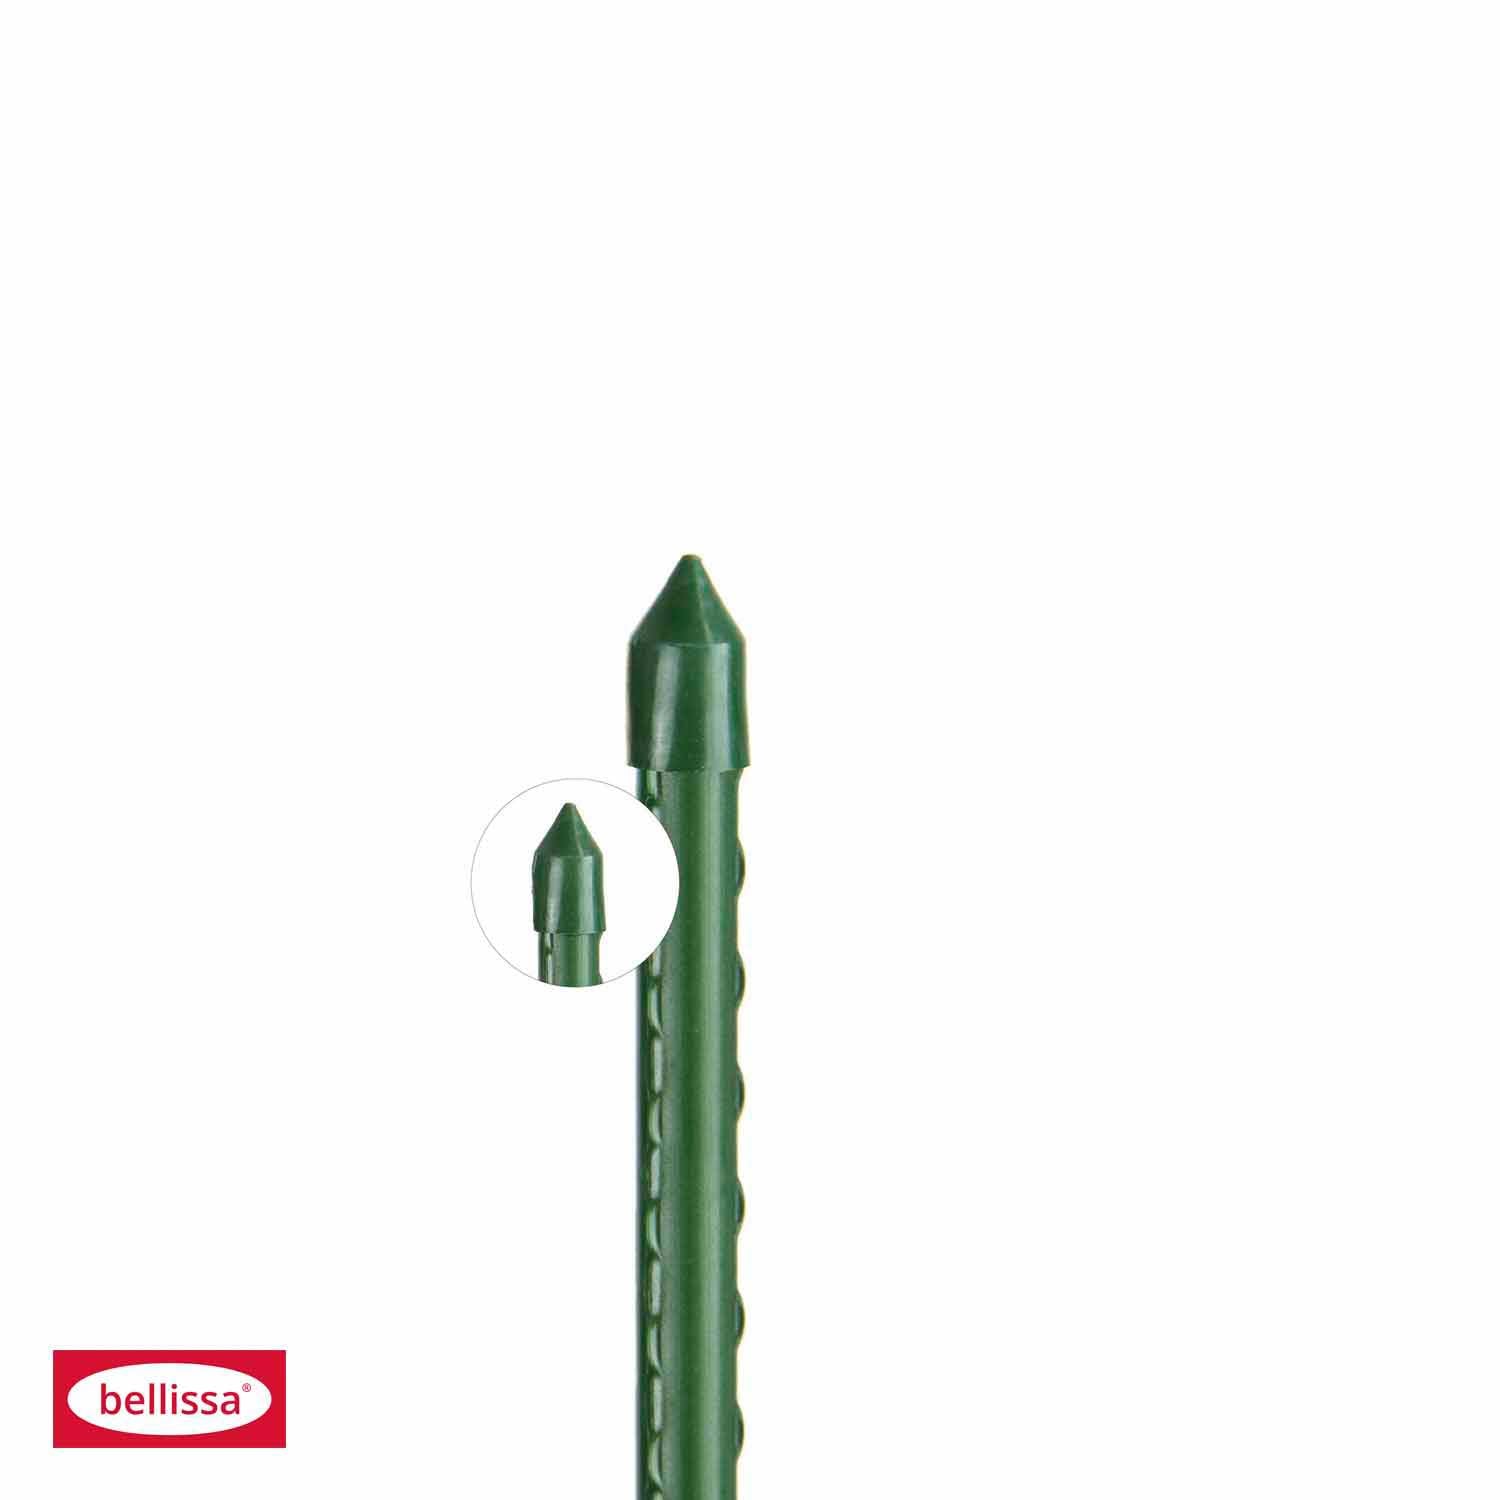 Bellissa Pflanzstäbe, grün, 120 cm hoch, Ø 11 mm Default Title